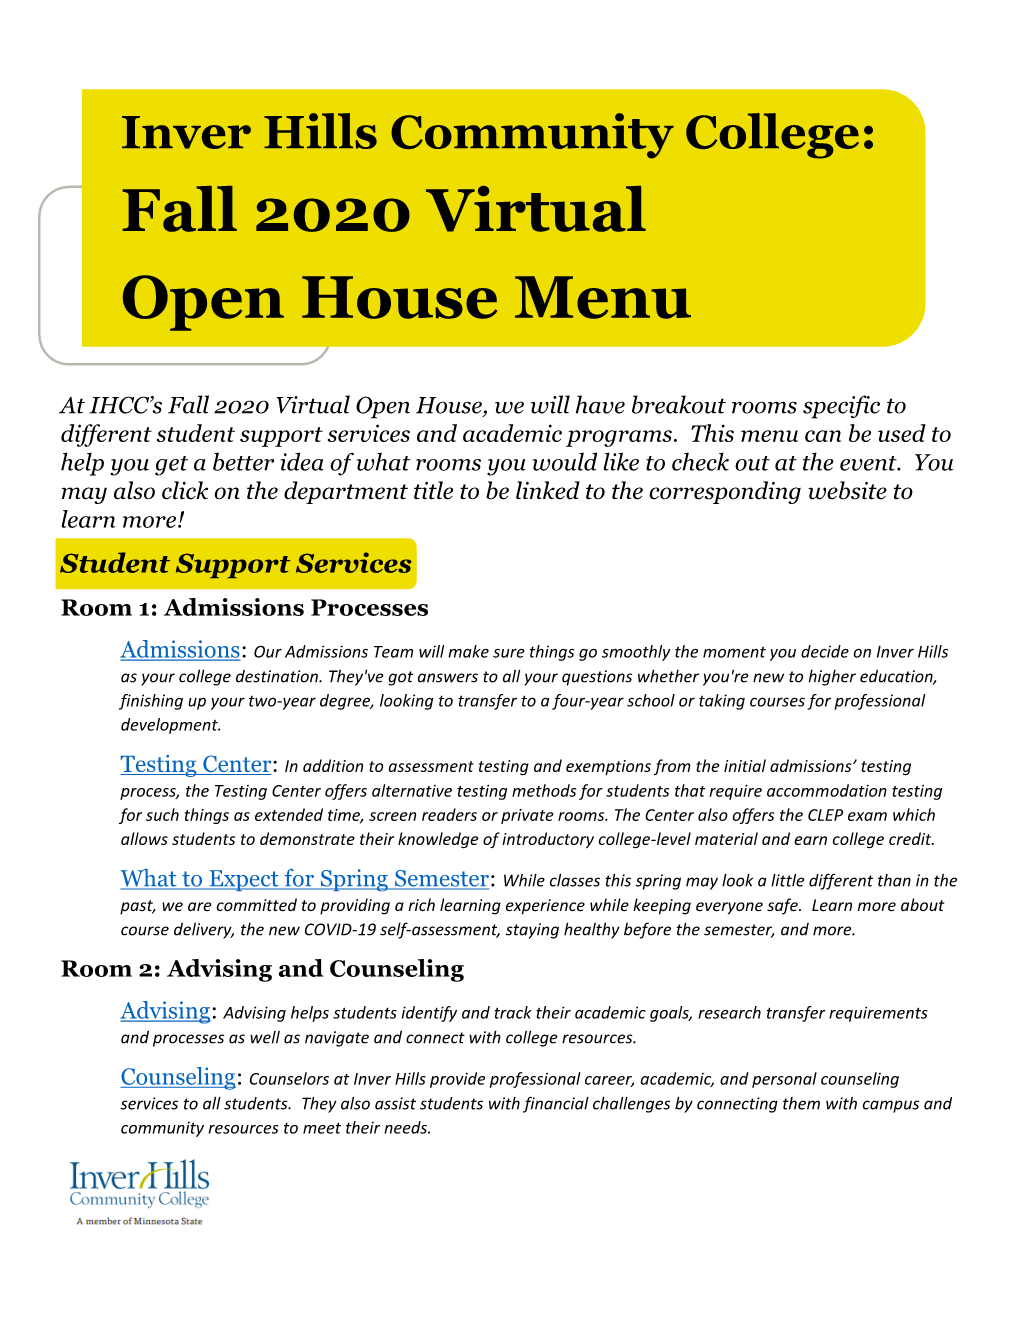 Fall 2020 Virtual Open House Menu